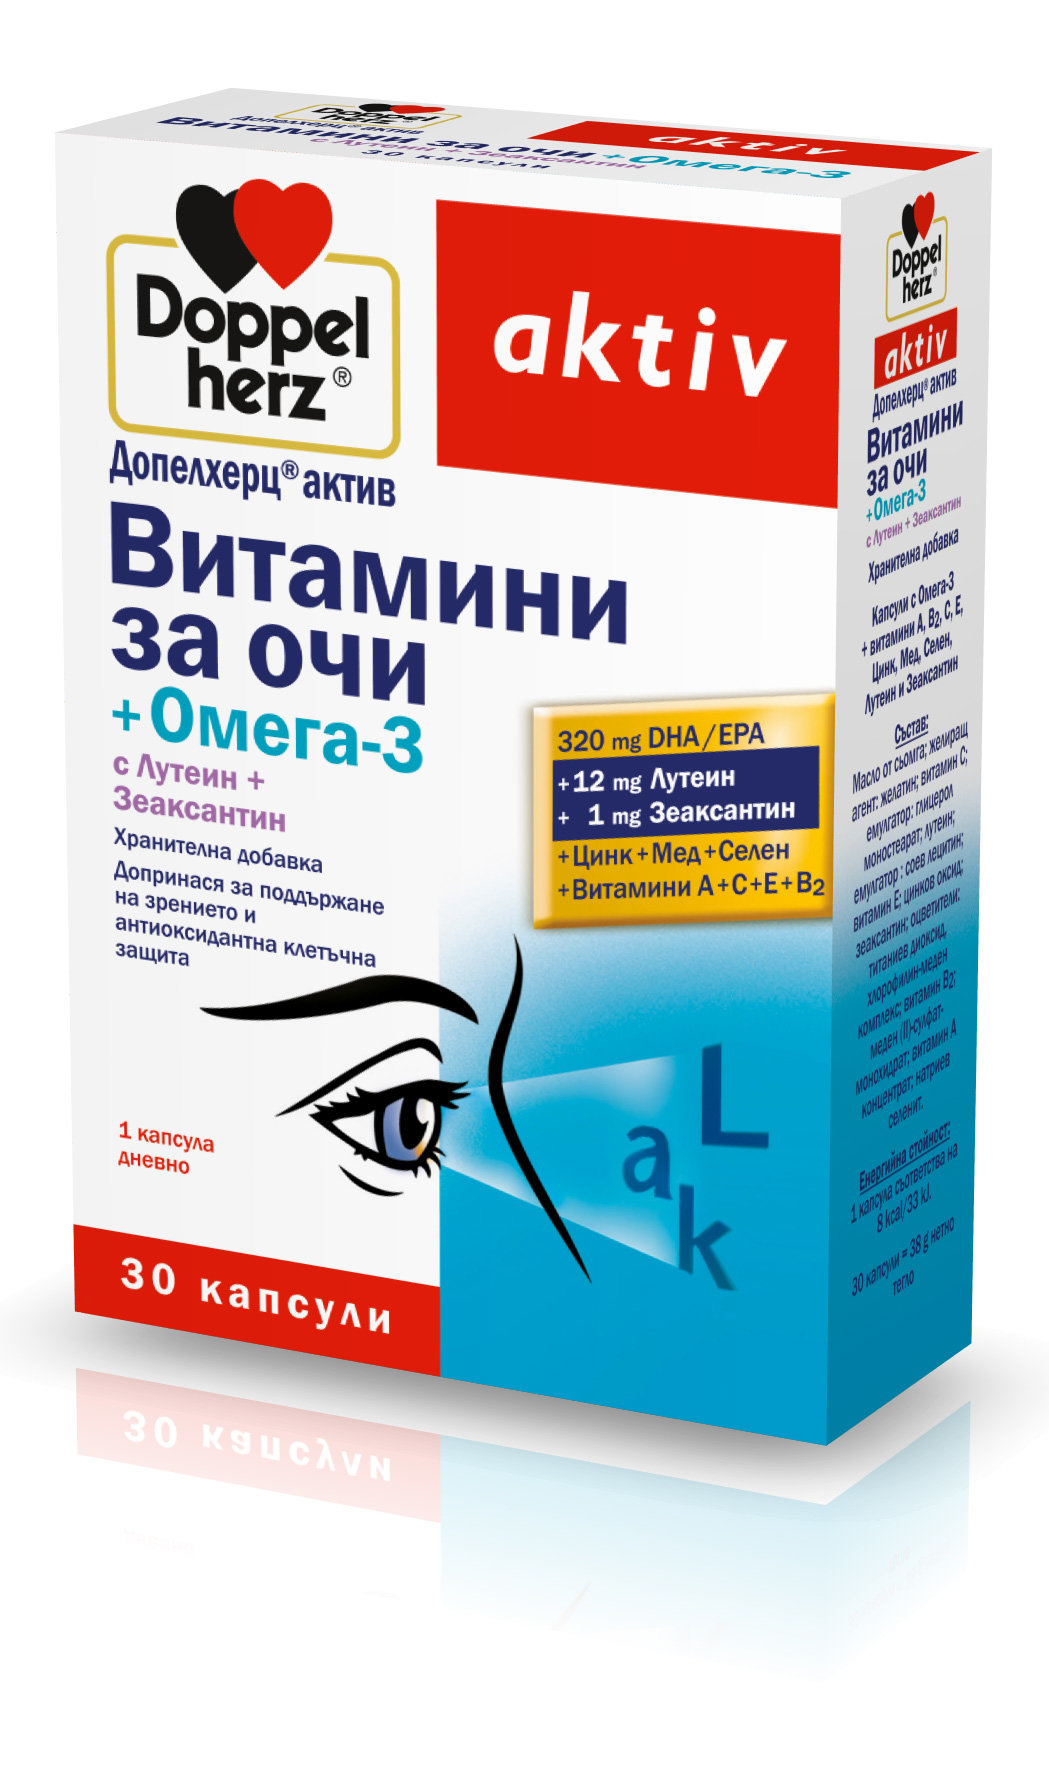 Допелхерц Витамини за очи с Омега-3 (Doppelherz)